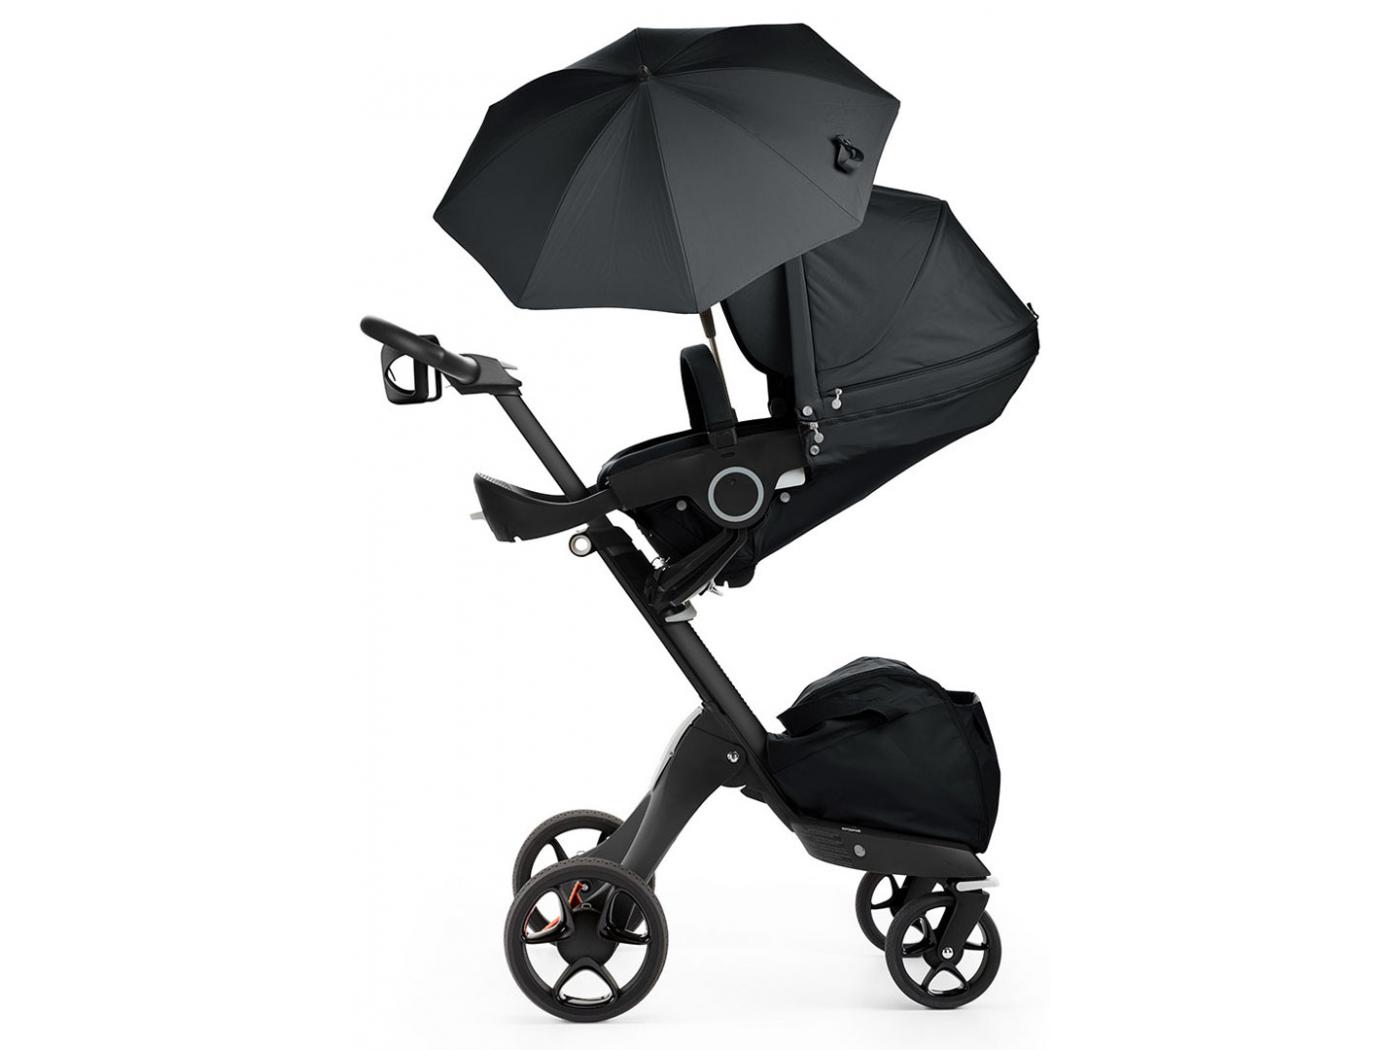 Stokke - Poussette Xplory V5 Chassis noir avec siège Noir, porte gobelet et  ombrelle inclus